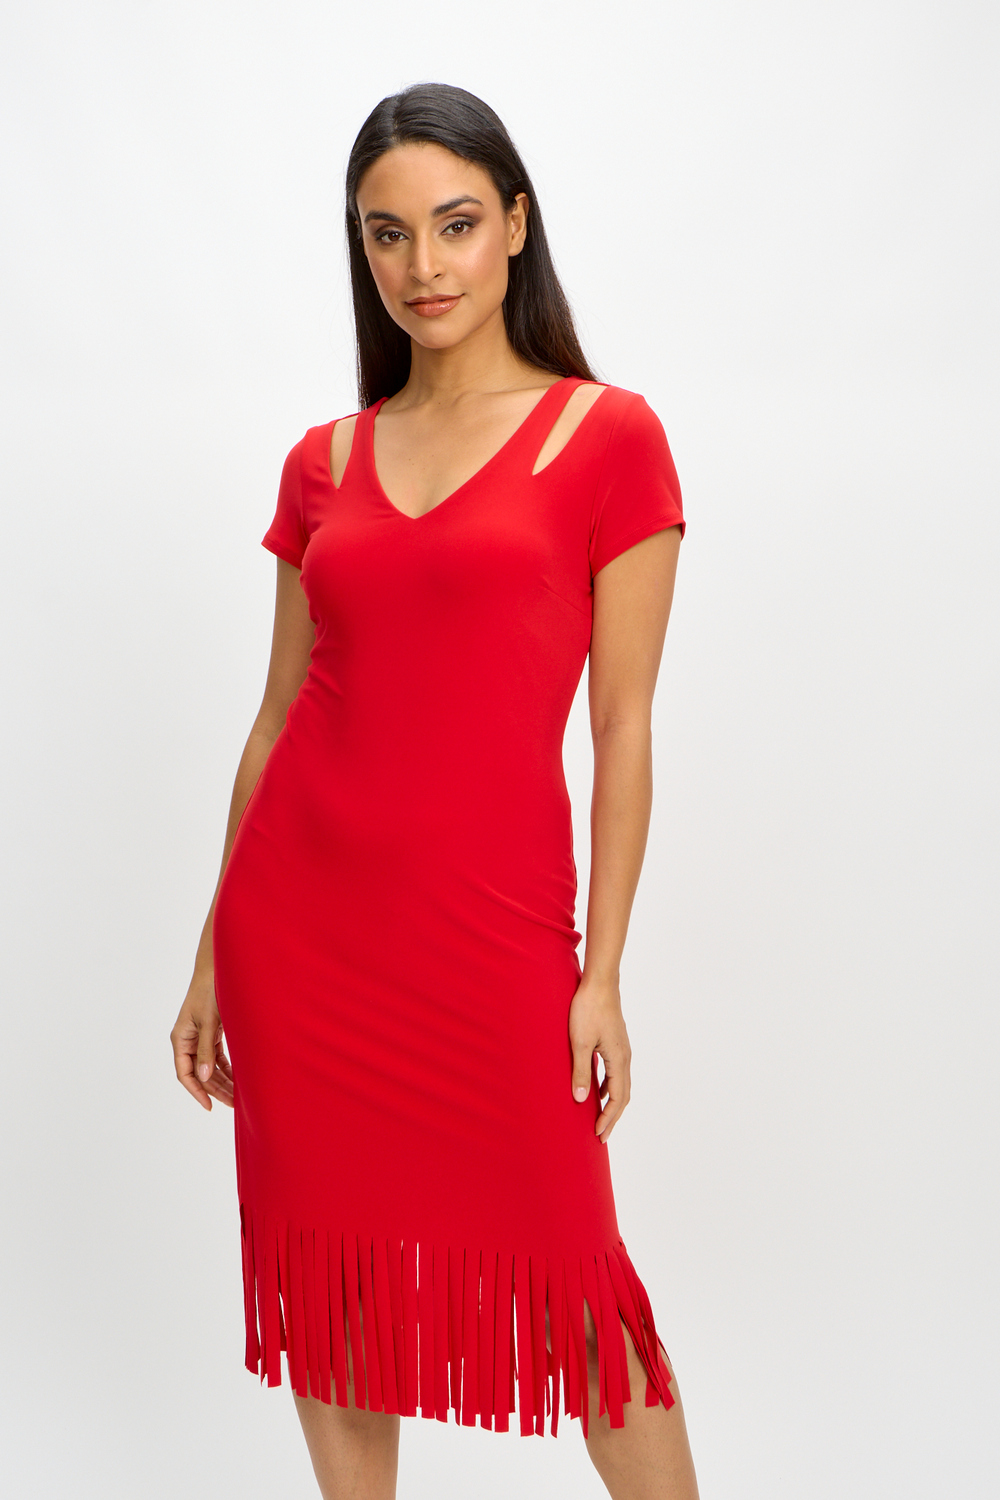 Fringe Detail Slit Dress Style 241053. Radiant Red